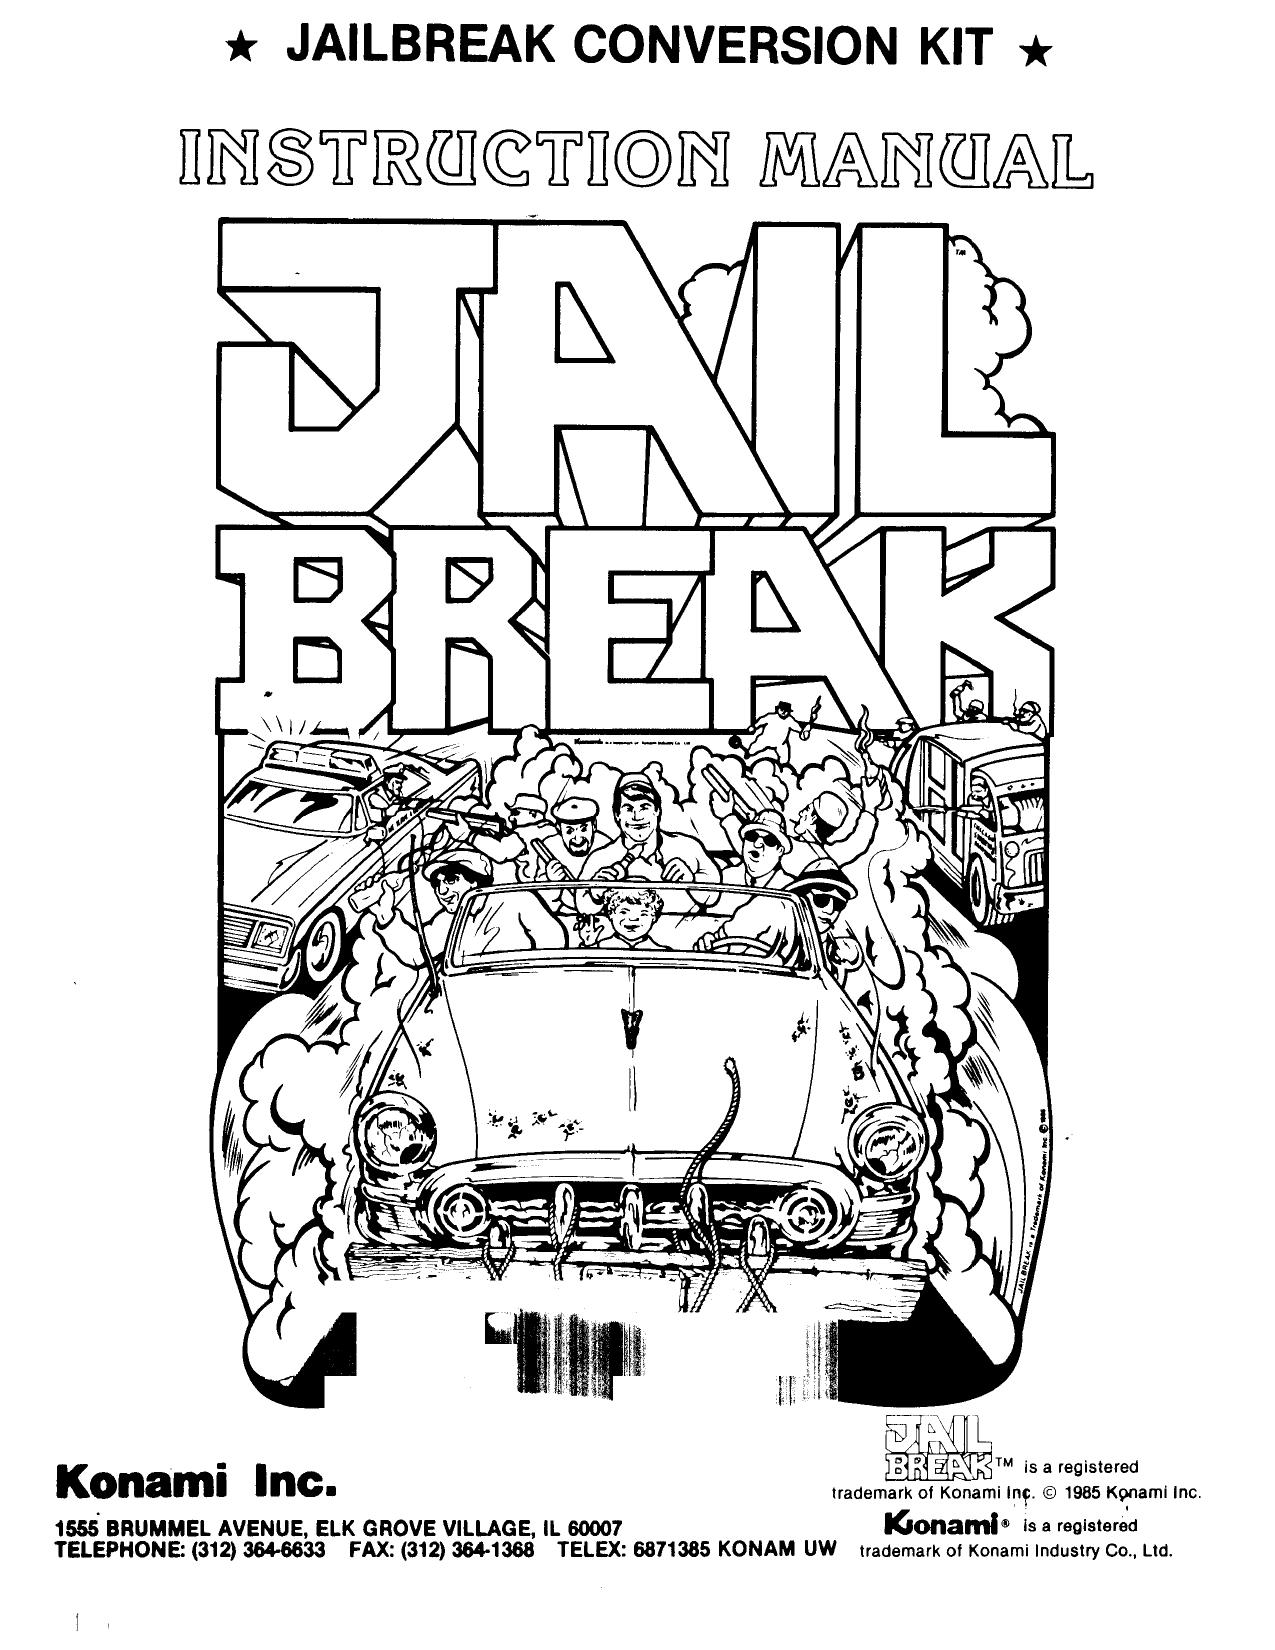 Jail Break Conversion Kit Instruction Manual